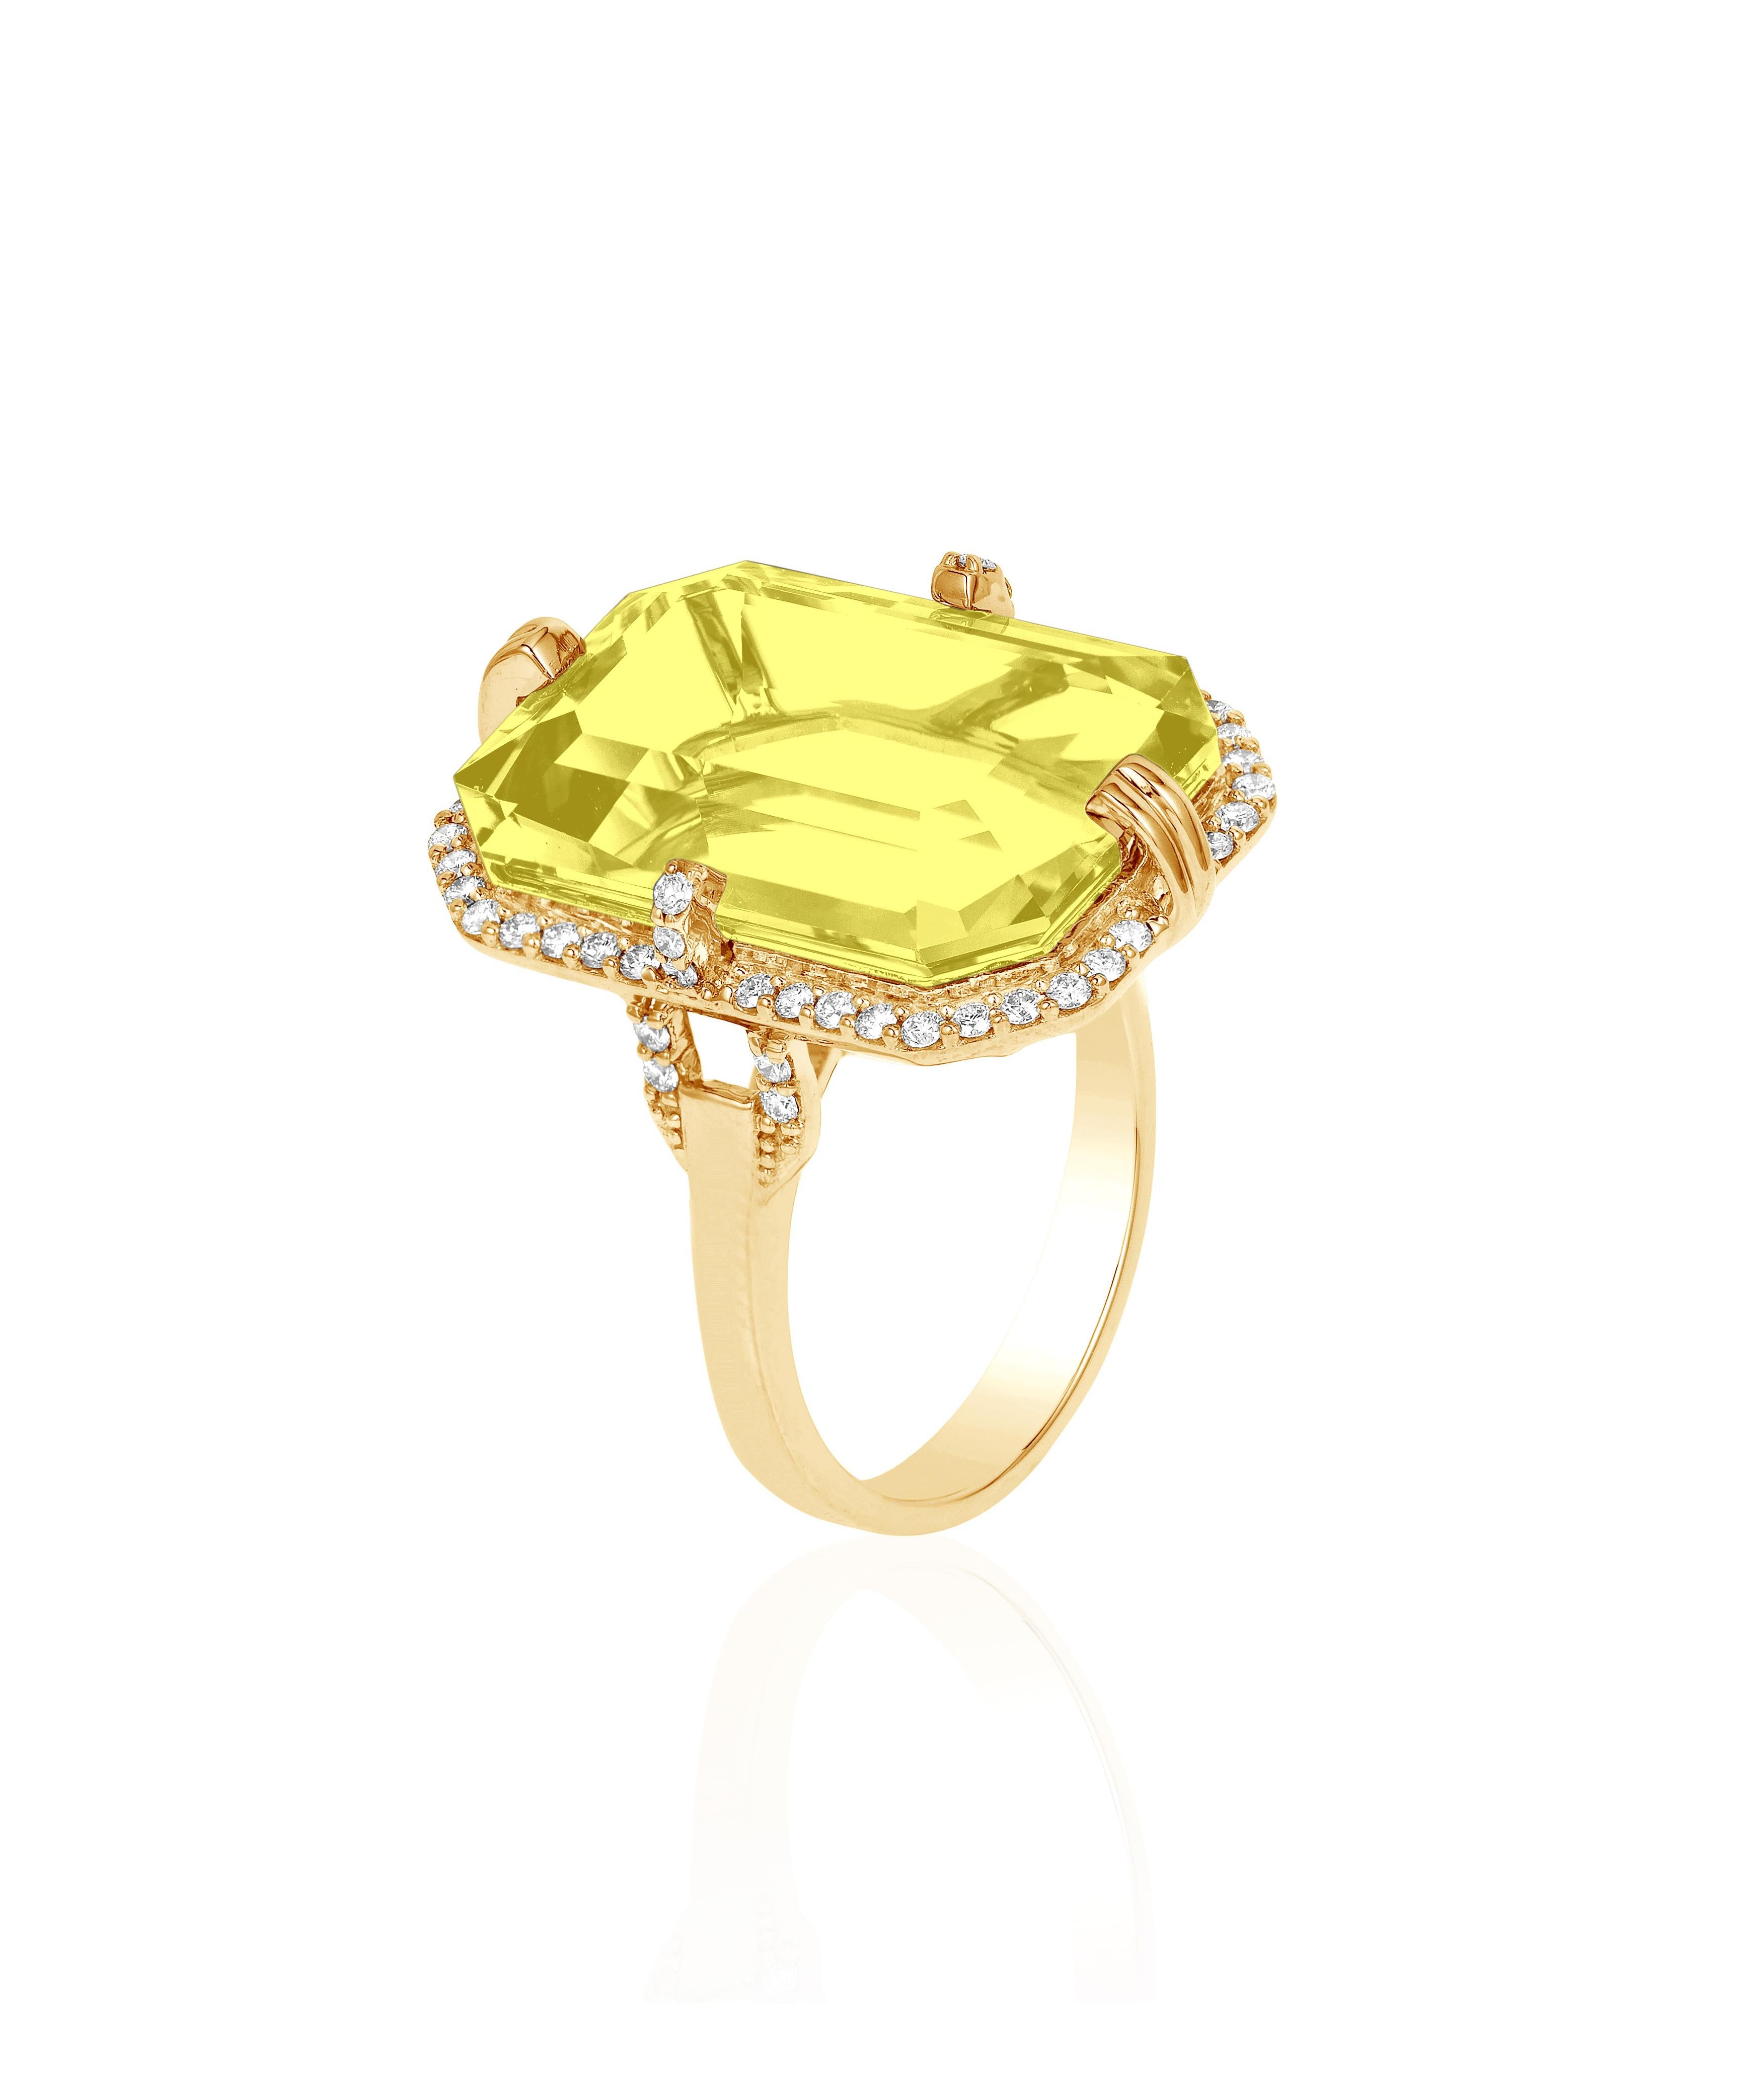 Contemporary Goshwara Emerald Cut Lemon Quartz And Diamond Ring For Sale